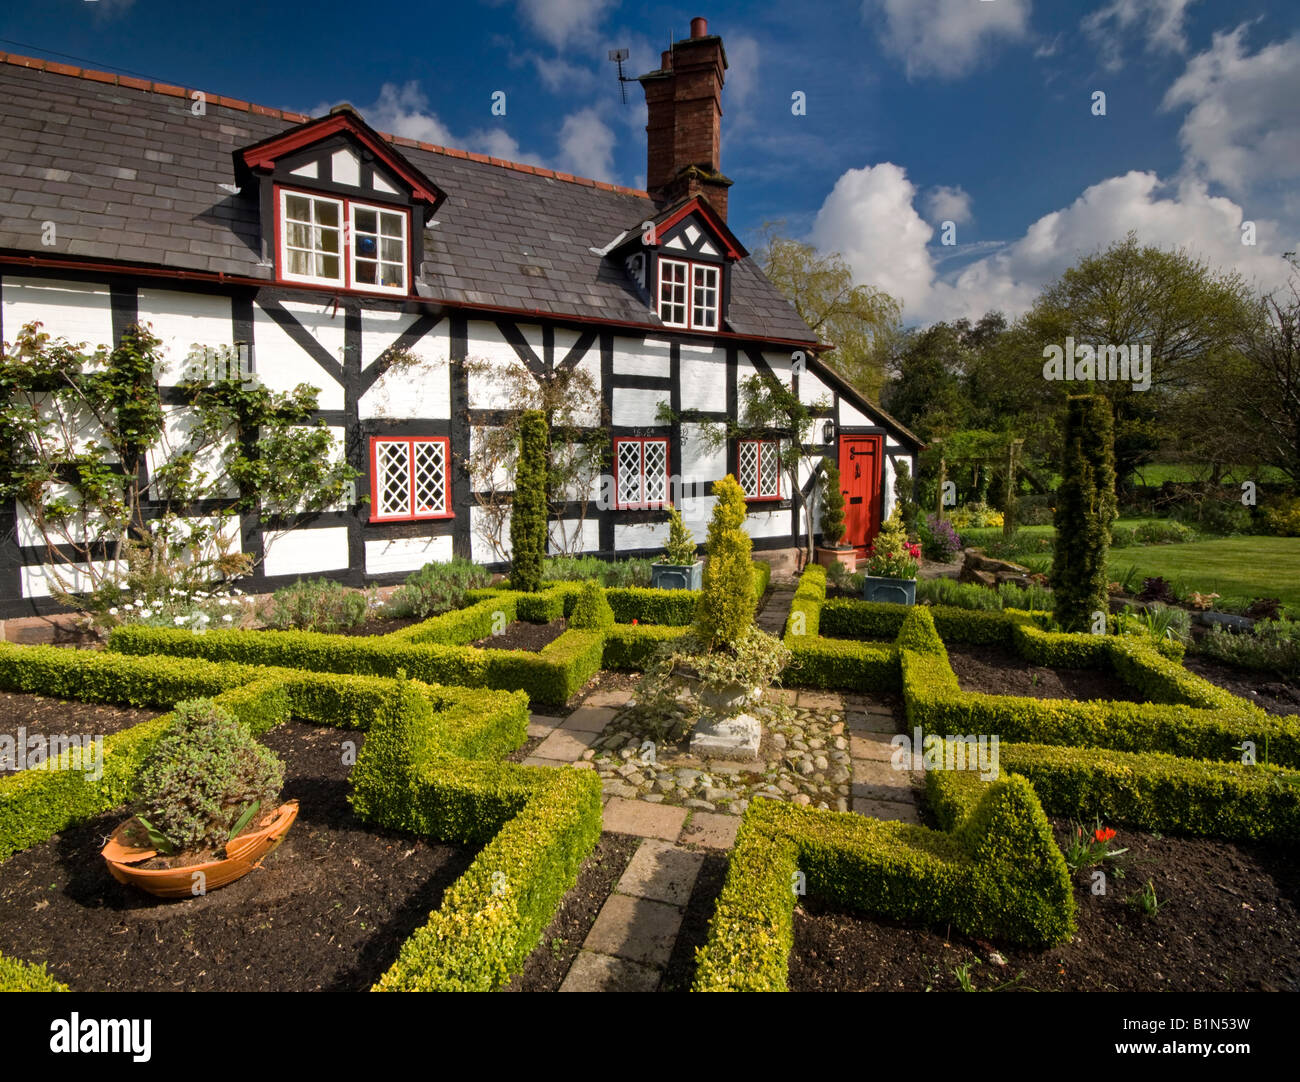 Picturesque Timber Framed Horsley Lane Farm Cottage, Peckforton, Cheshire, England, UK Stock Photo